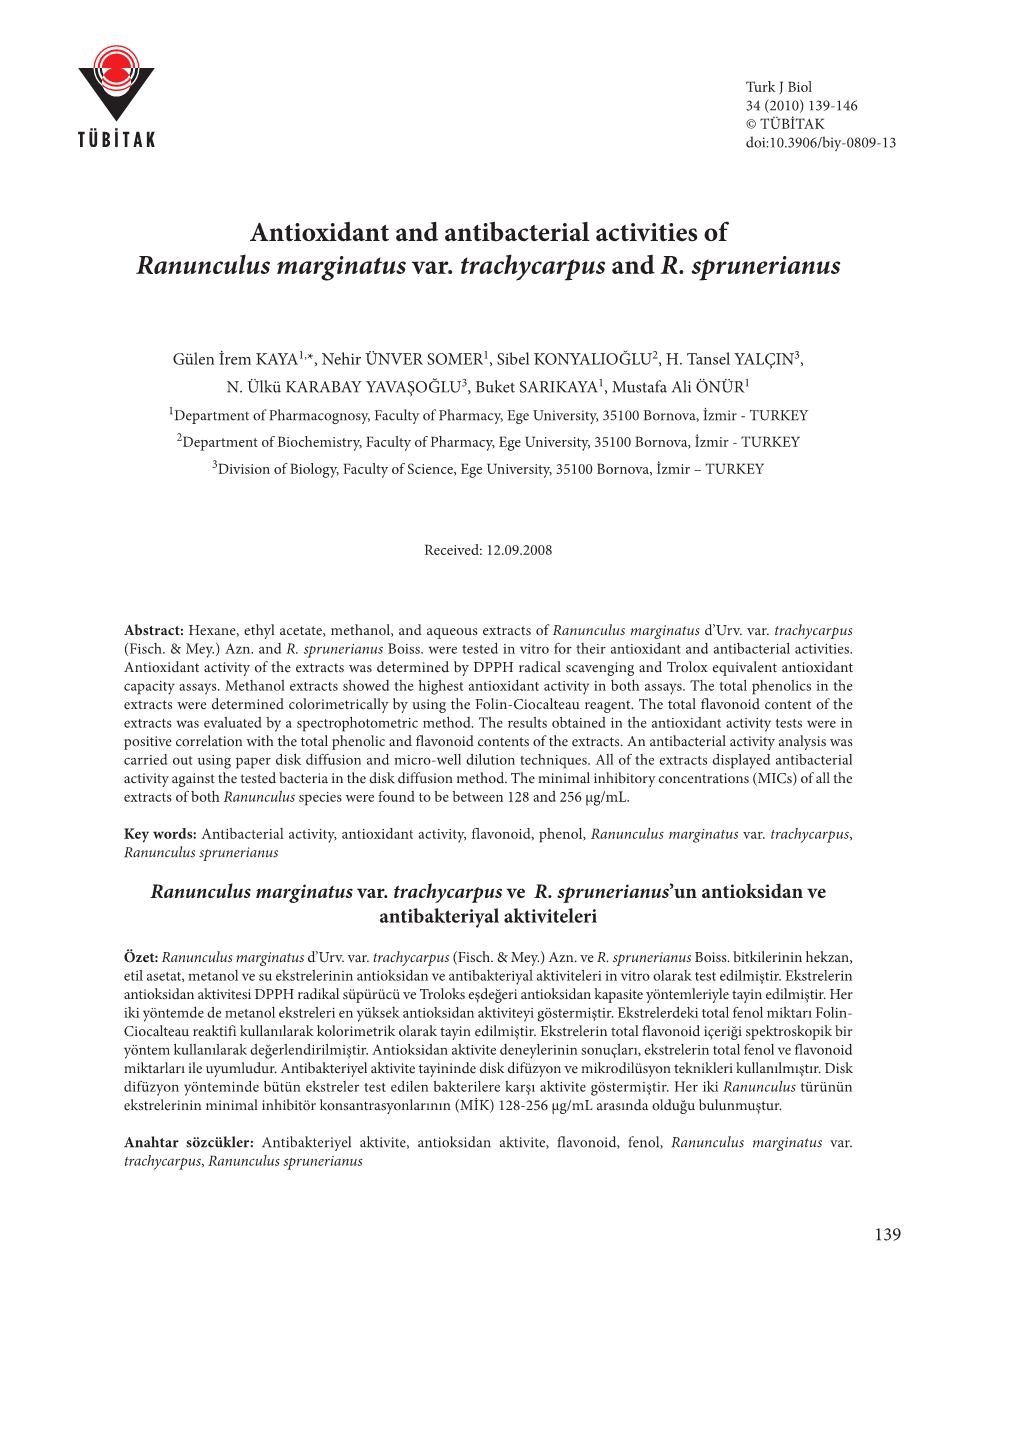 Antioxidant and Antibacterial Activities of Ranunculus Marginatus Var. Trachycarpus and R. Sprunerianus